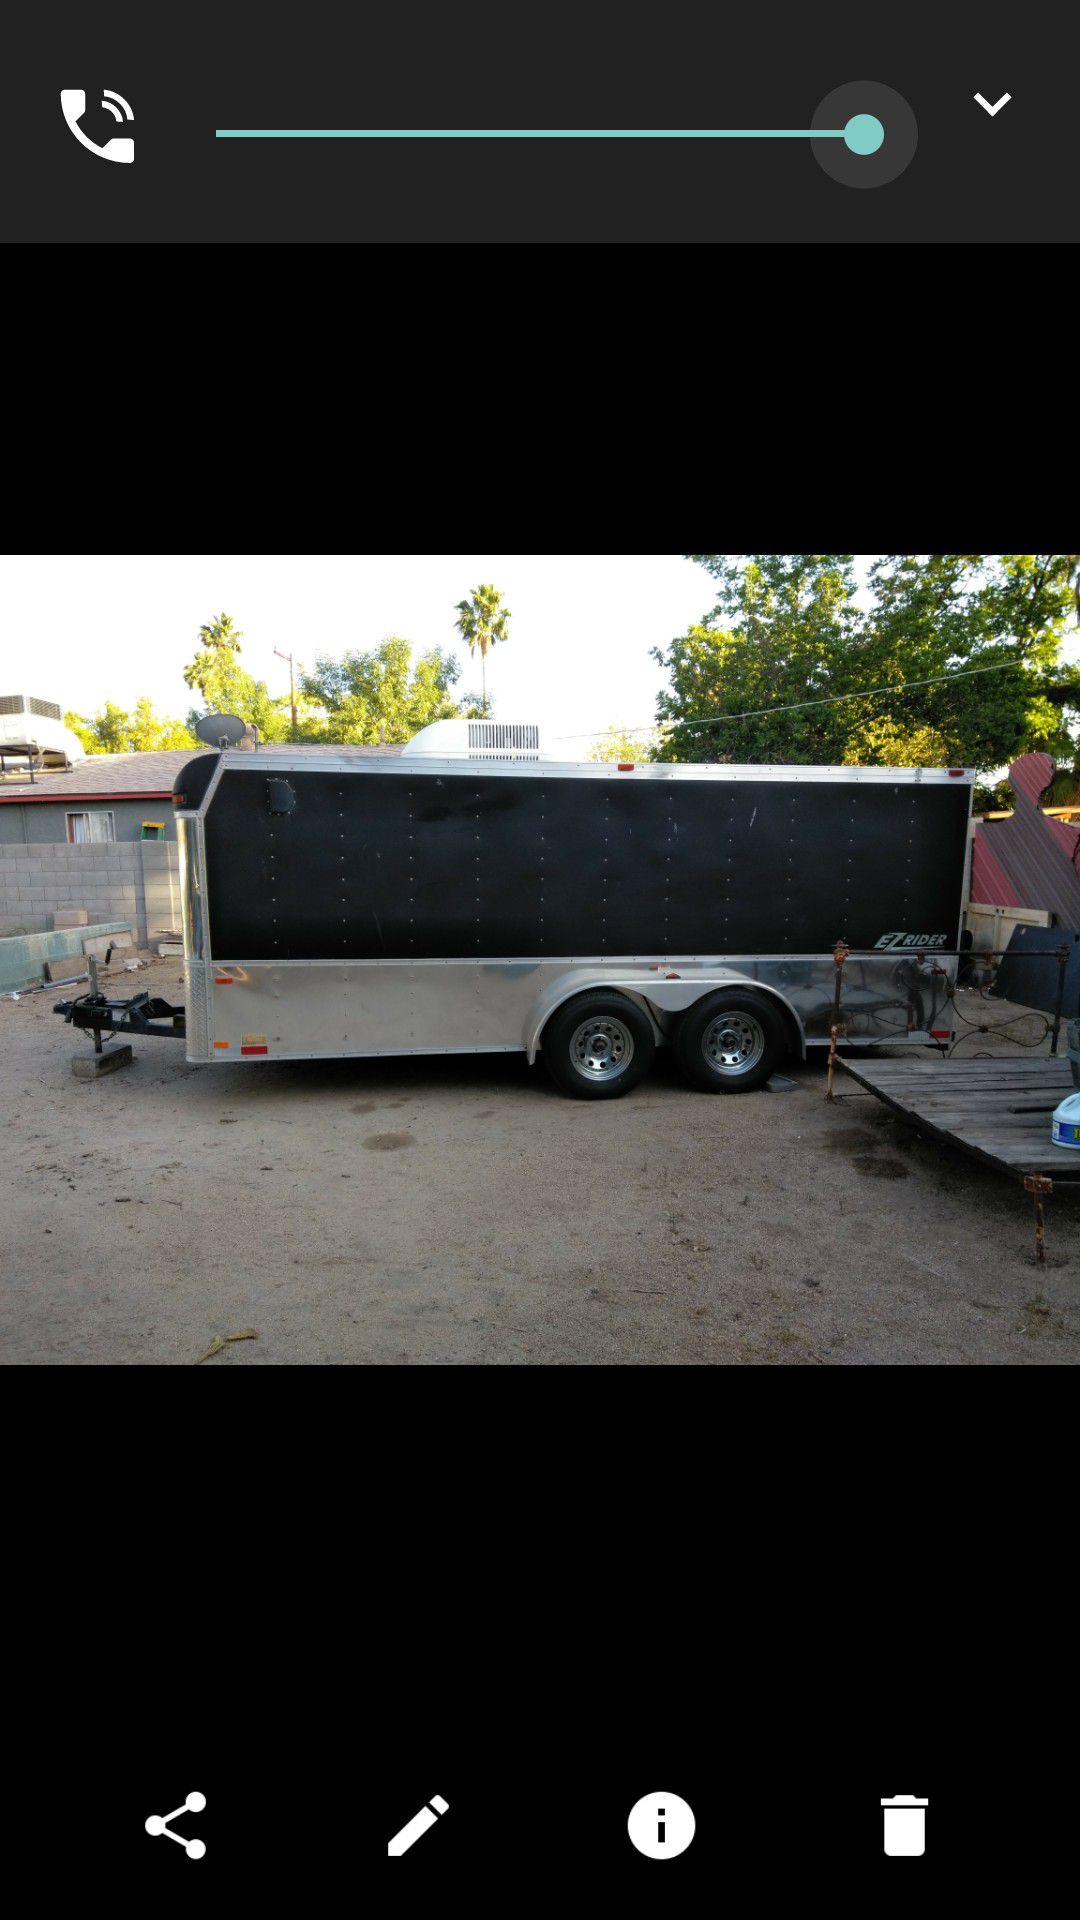 Enclosed utility trailer